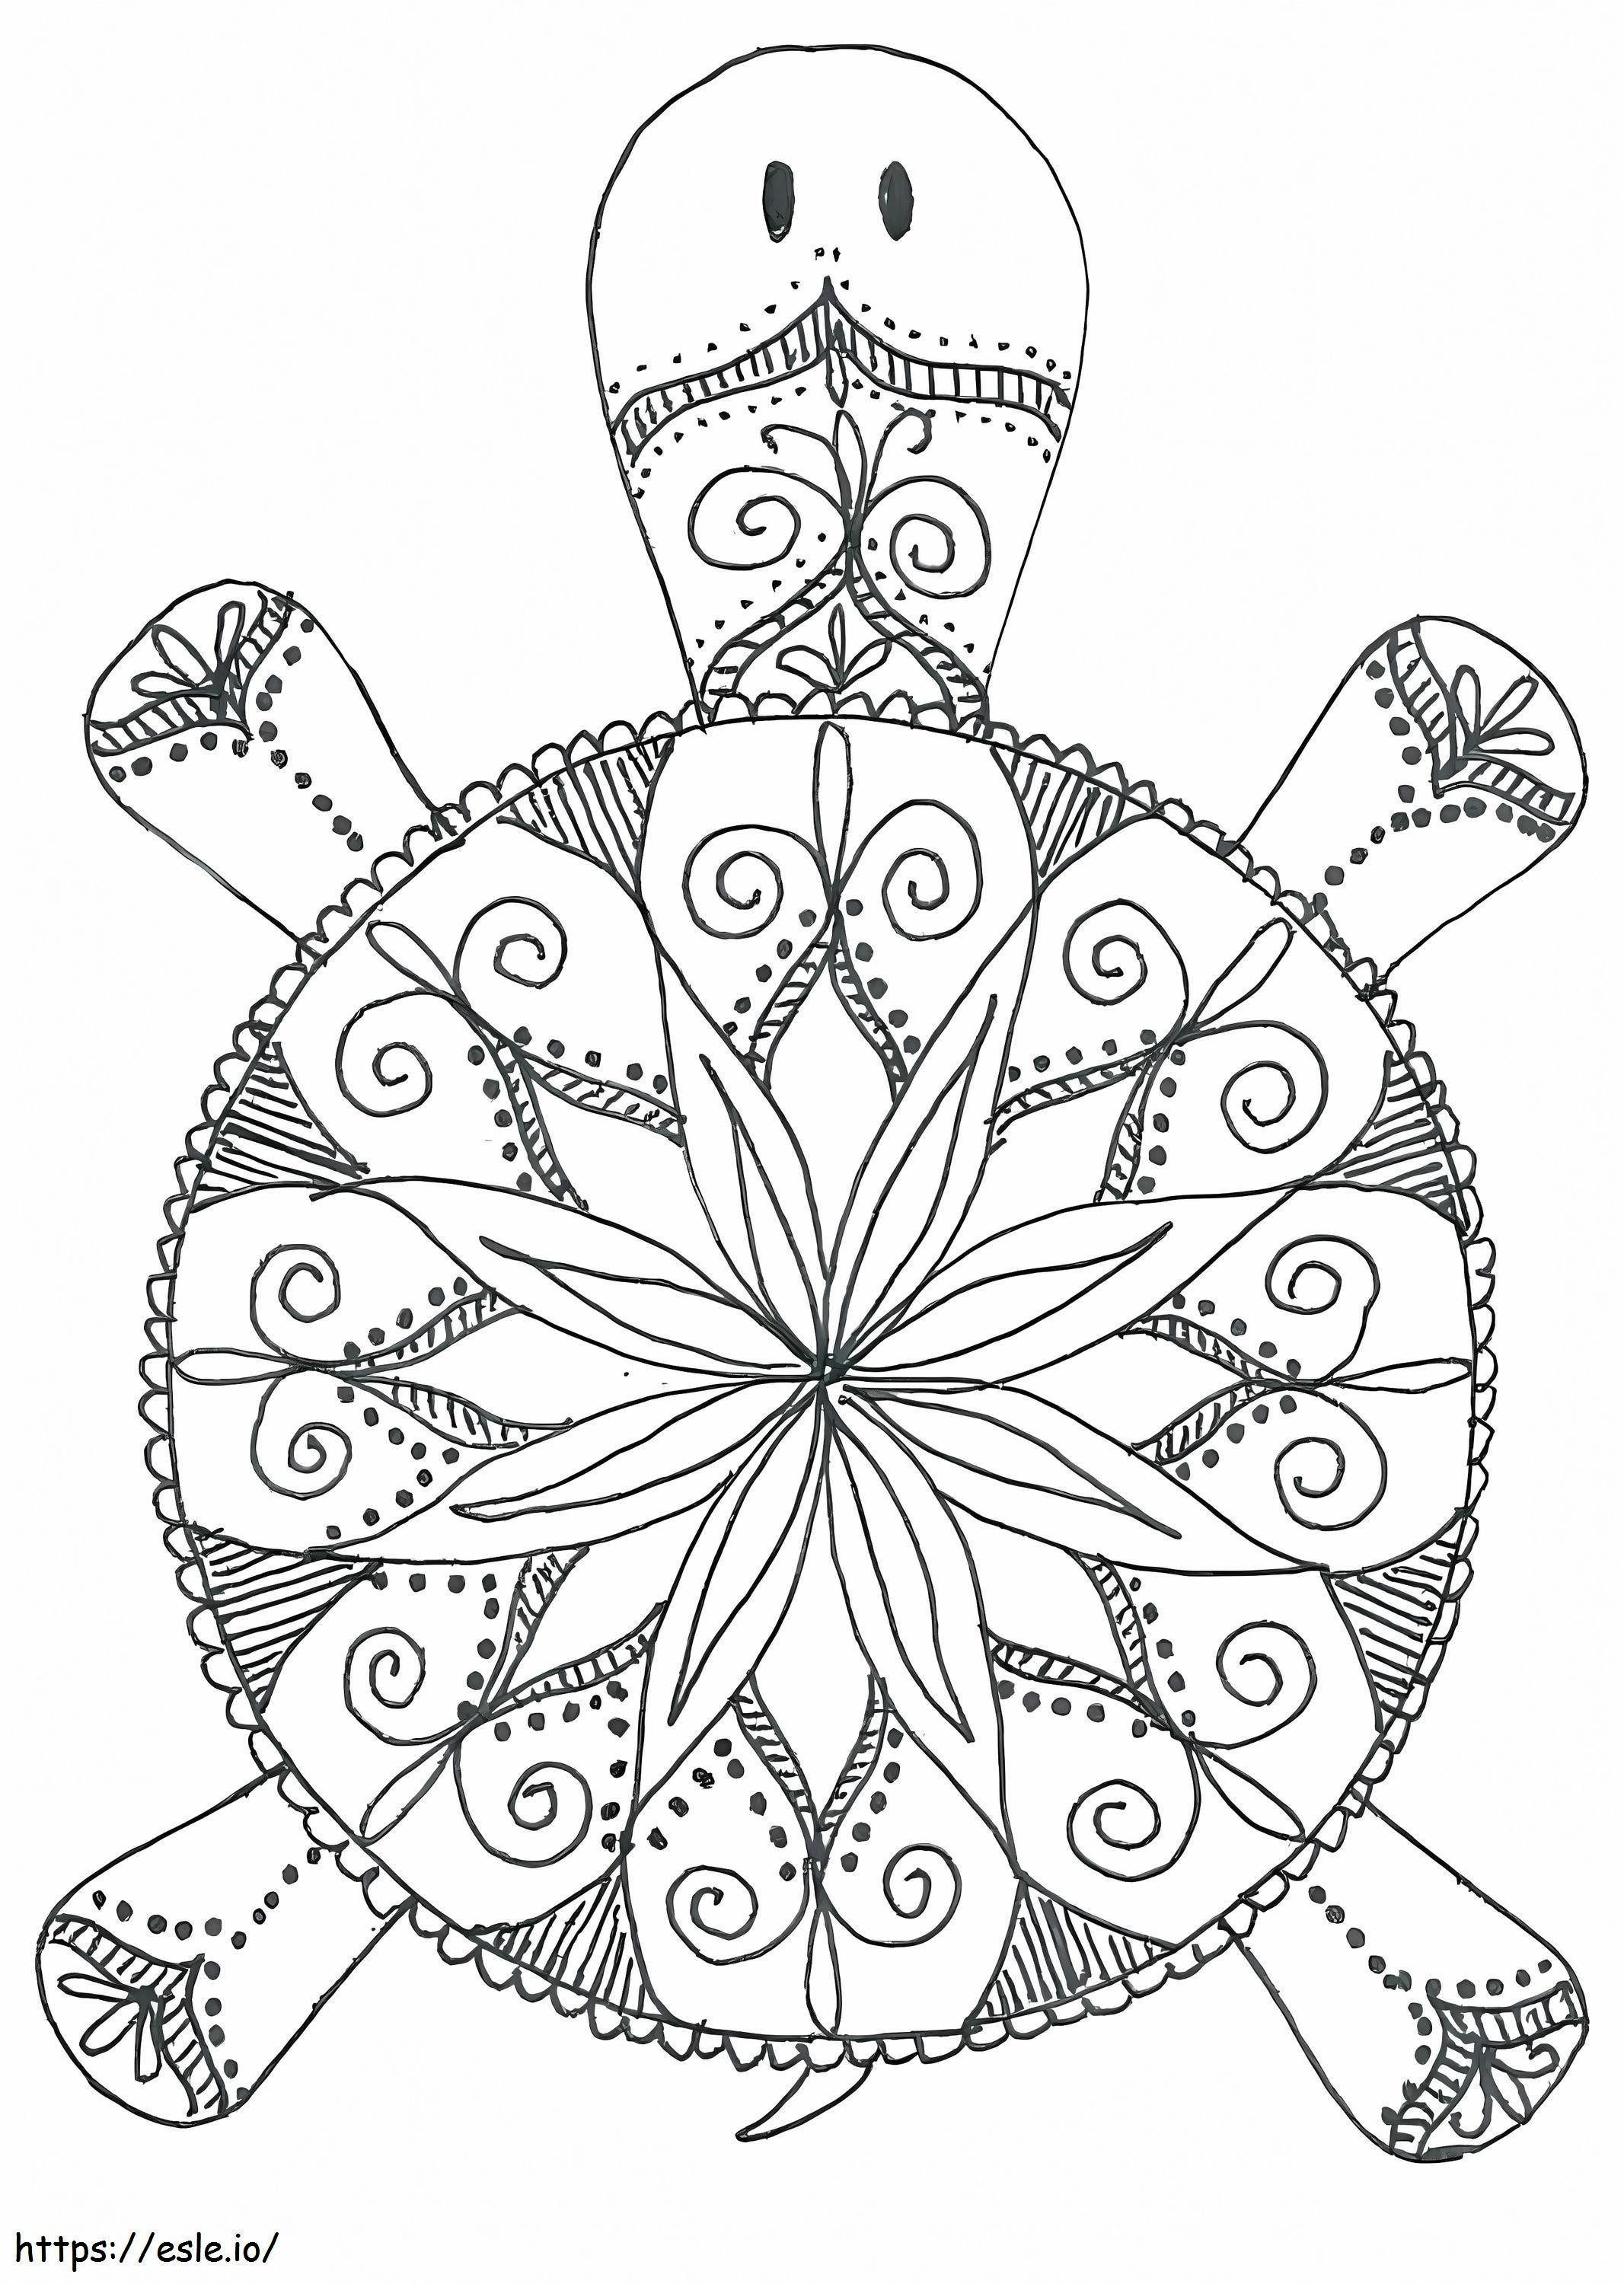 Turtle Animals Mandala coloring page